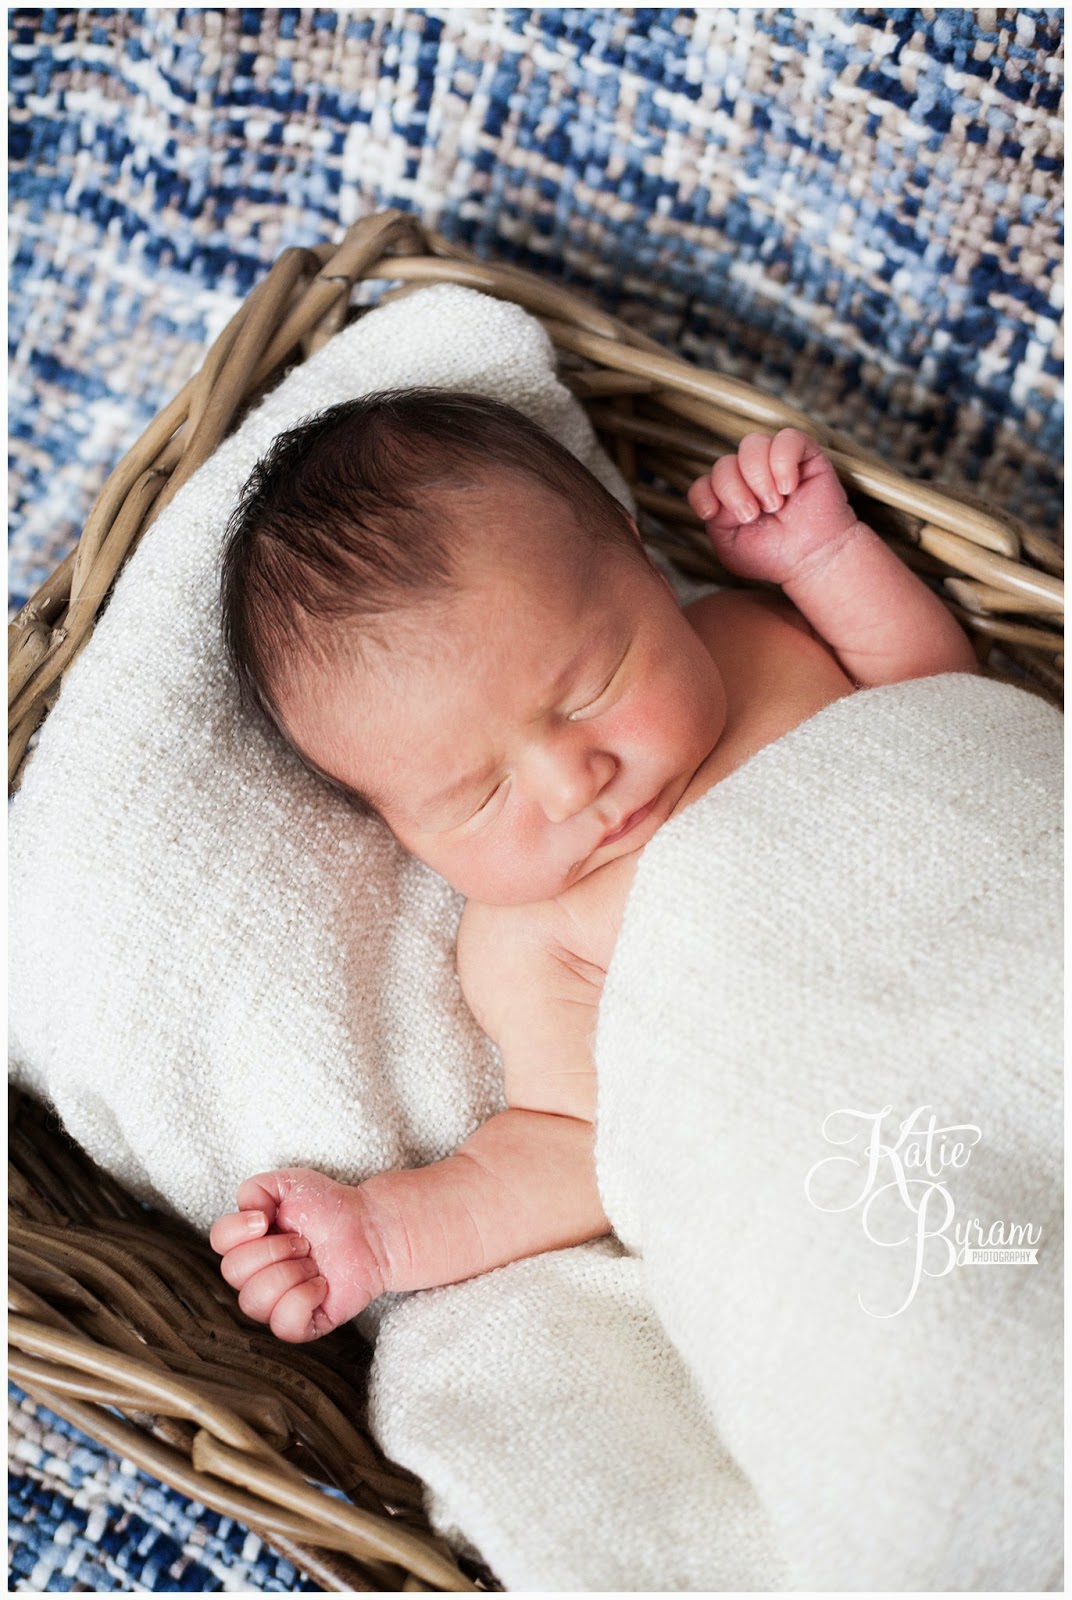 newborn photography, katie byram photography, baby photography, lifestyle photography, relaxed newborn photography